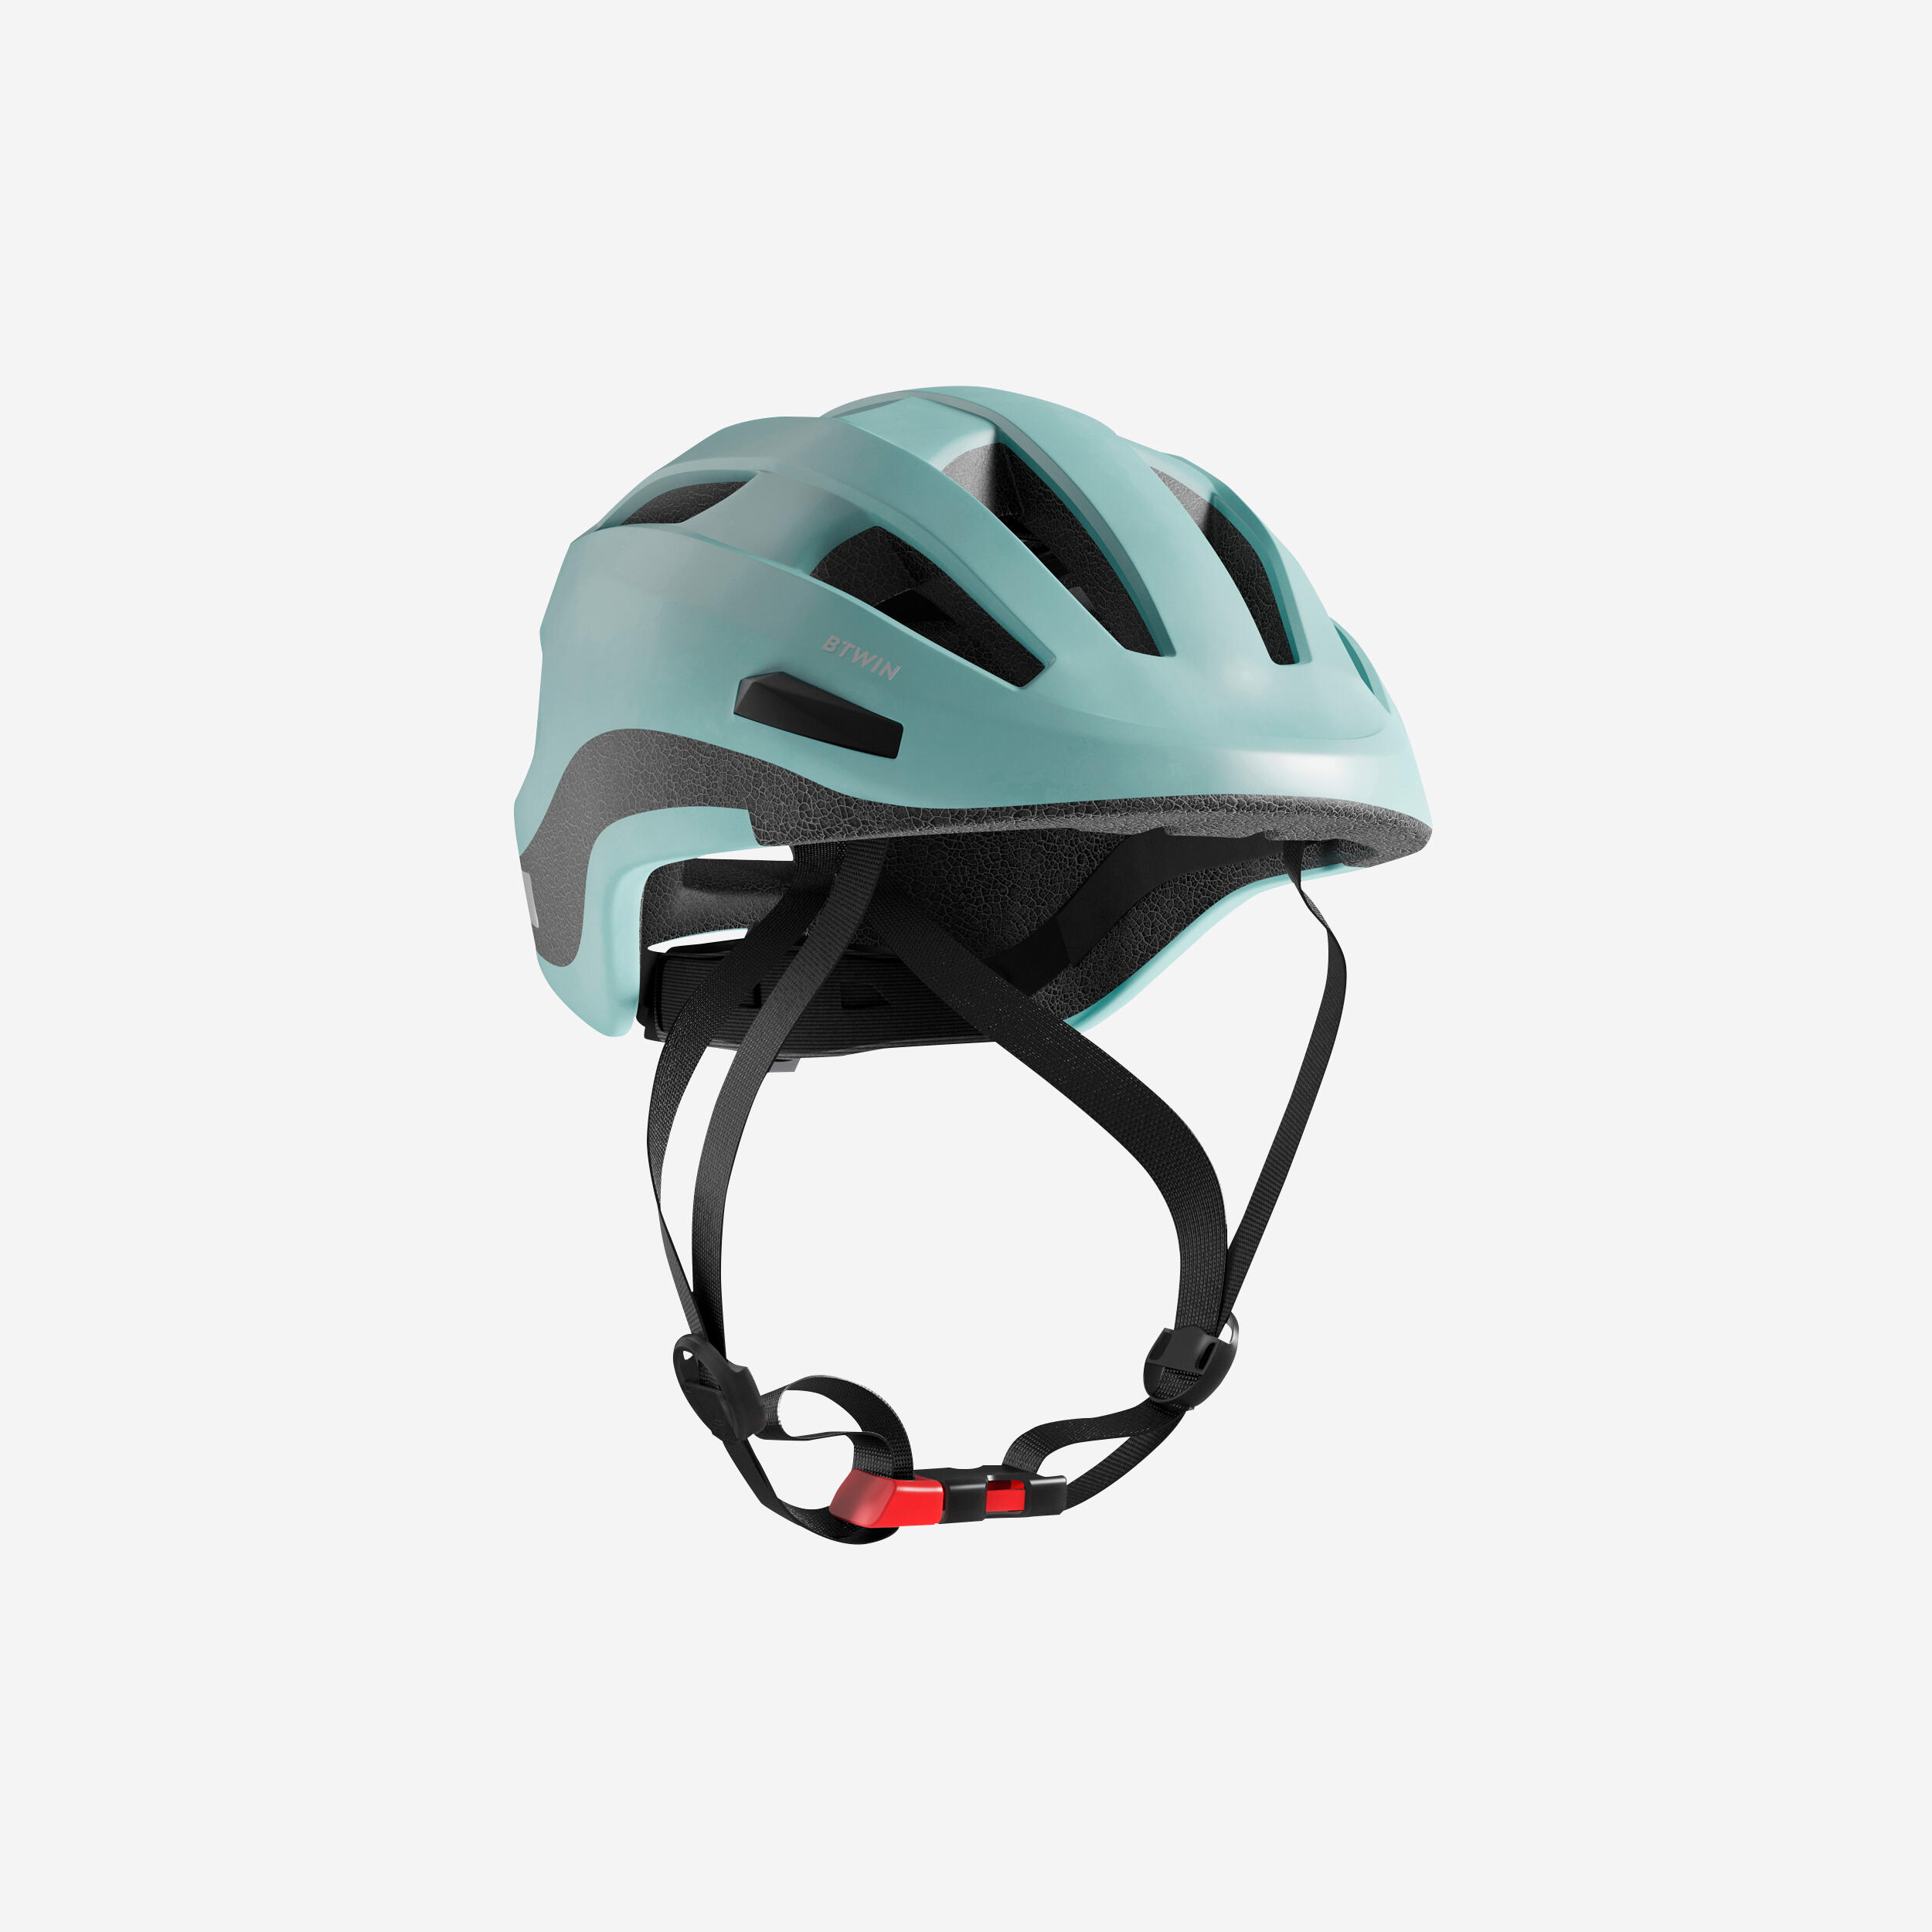 City Cycling Helmet 500 - Green 1/5